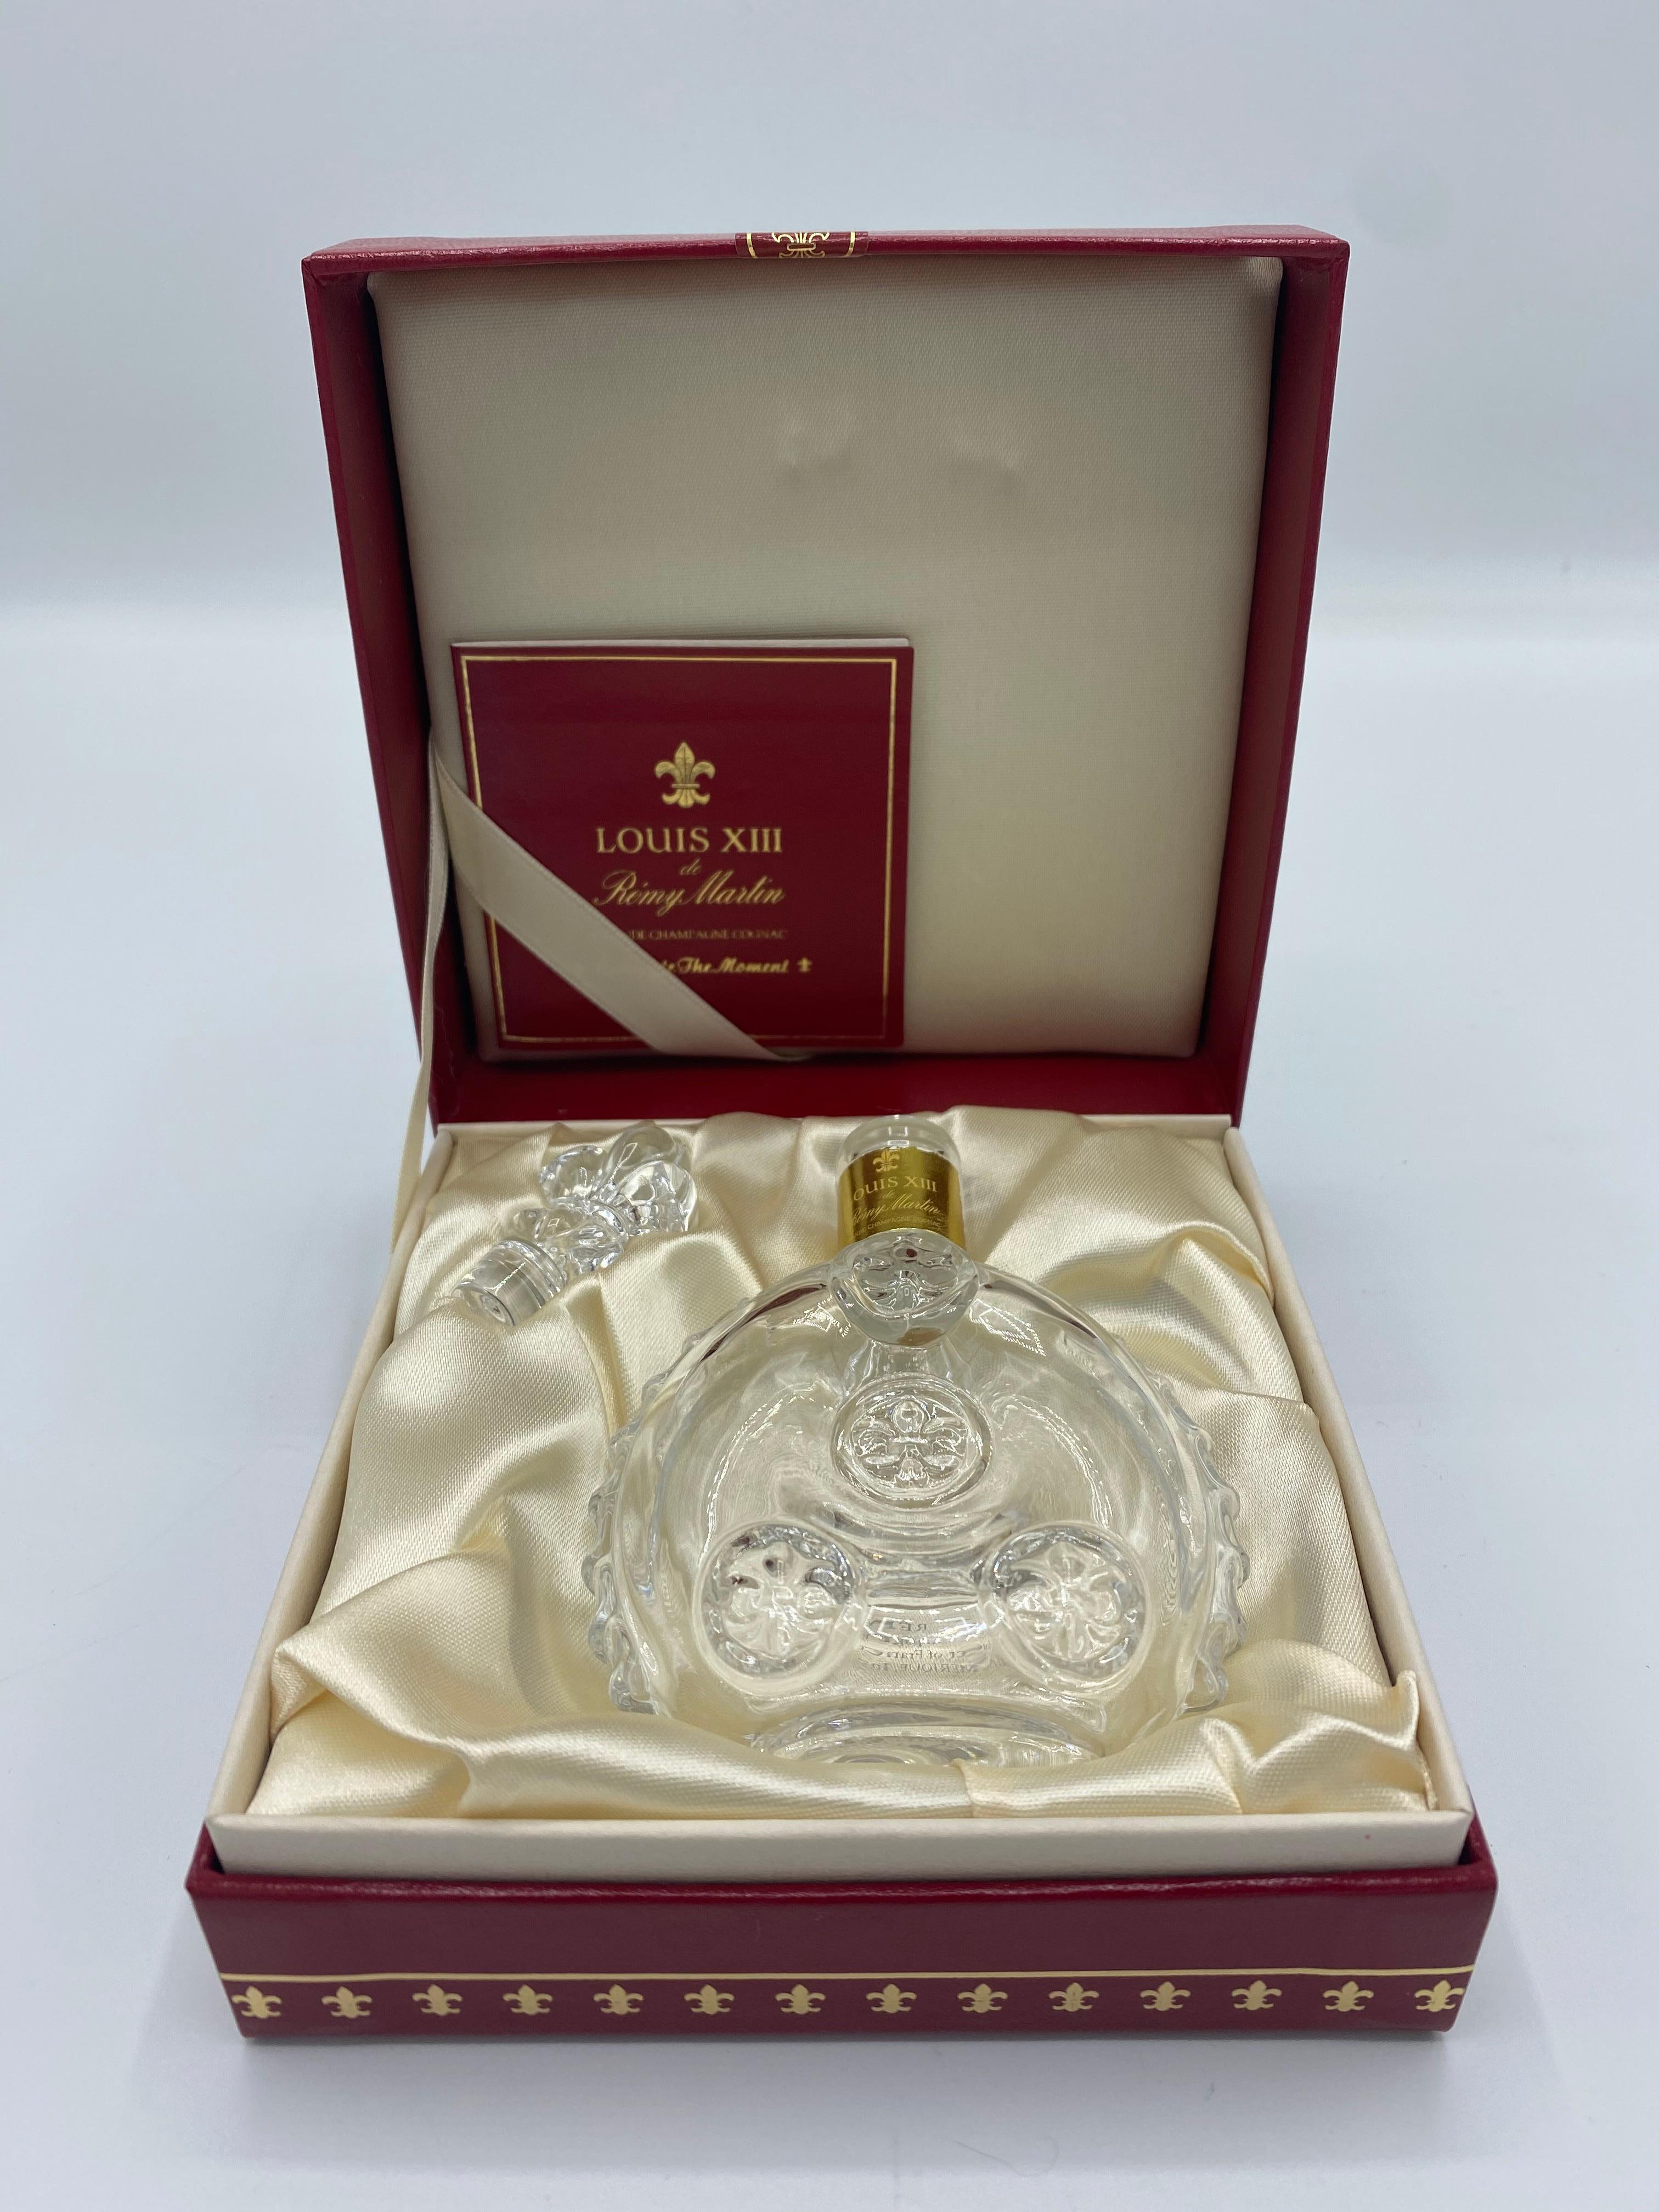 Vintage Baccarat Crystal Louis XIII Remy Martin Cognac Liquor Decanter Set:: 50ml 3